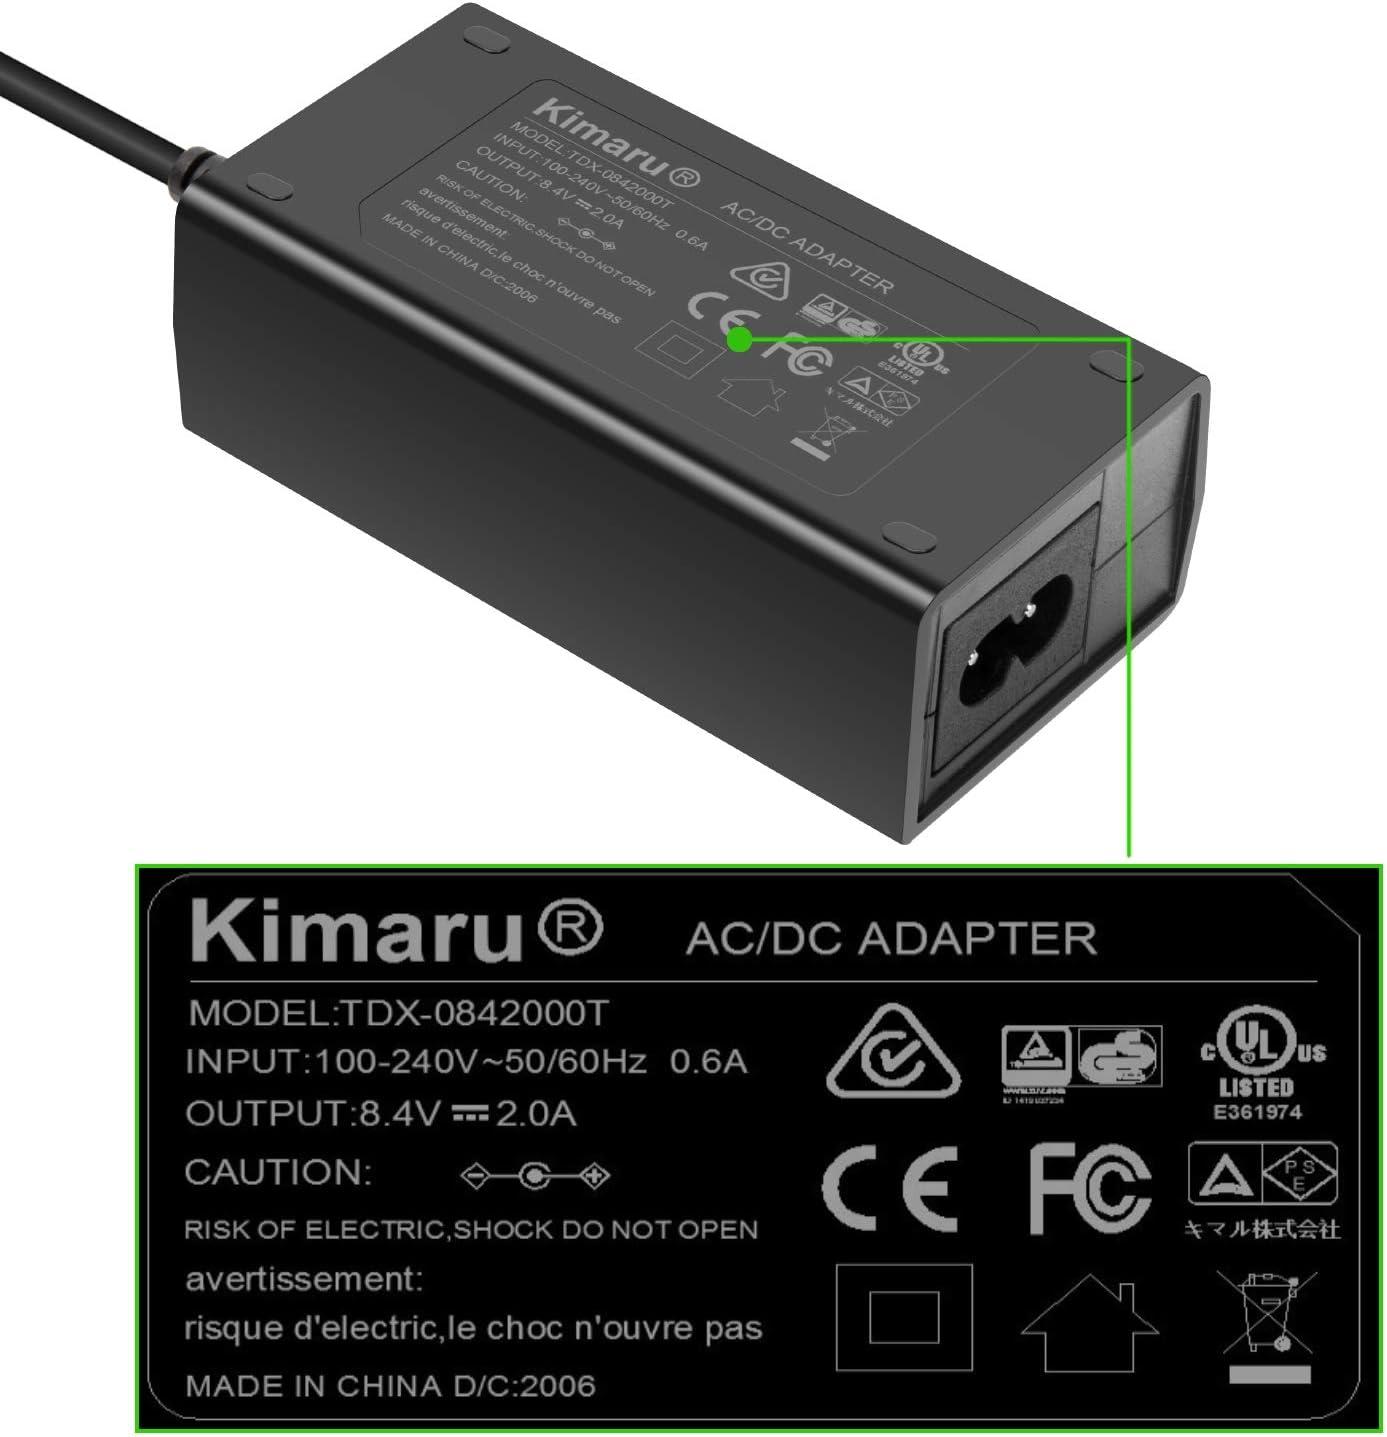 Kimaru DMW-DCC12 Coupler DMW-AC10 DMW-AC8 AC Power Adapter DMW-BLF19 Battery for Panasonic Lumix DMC-GH3 GH4 GH3K GH4K GH3A GH3H GH4H DC-GH5 GH5S GH5M G9 G9L Cameras.